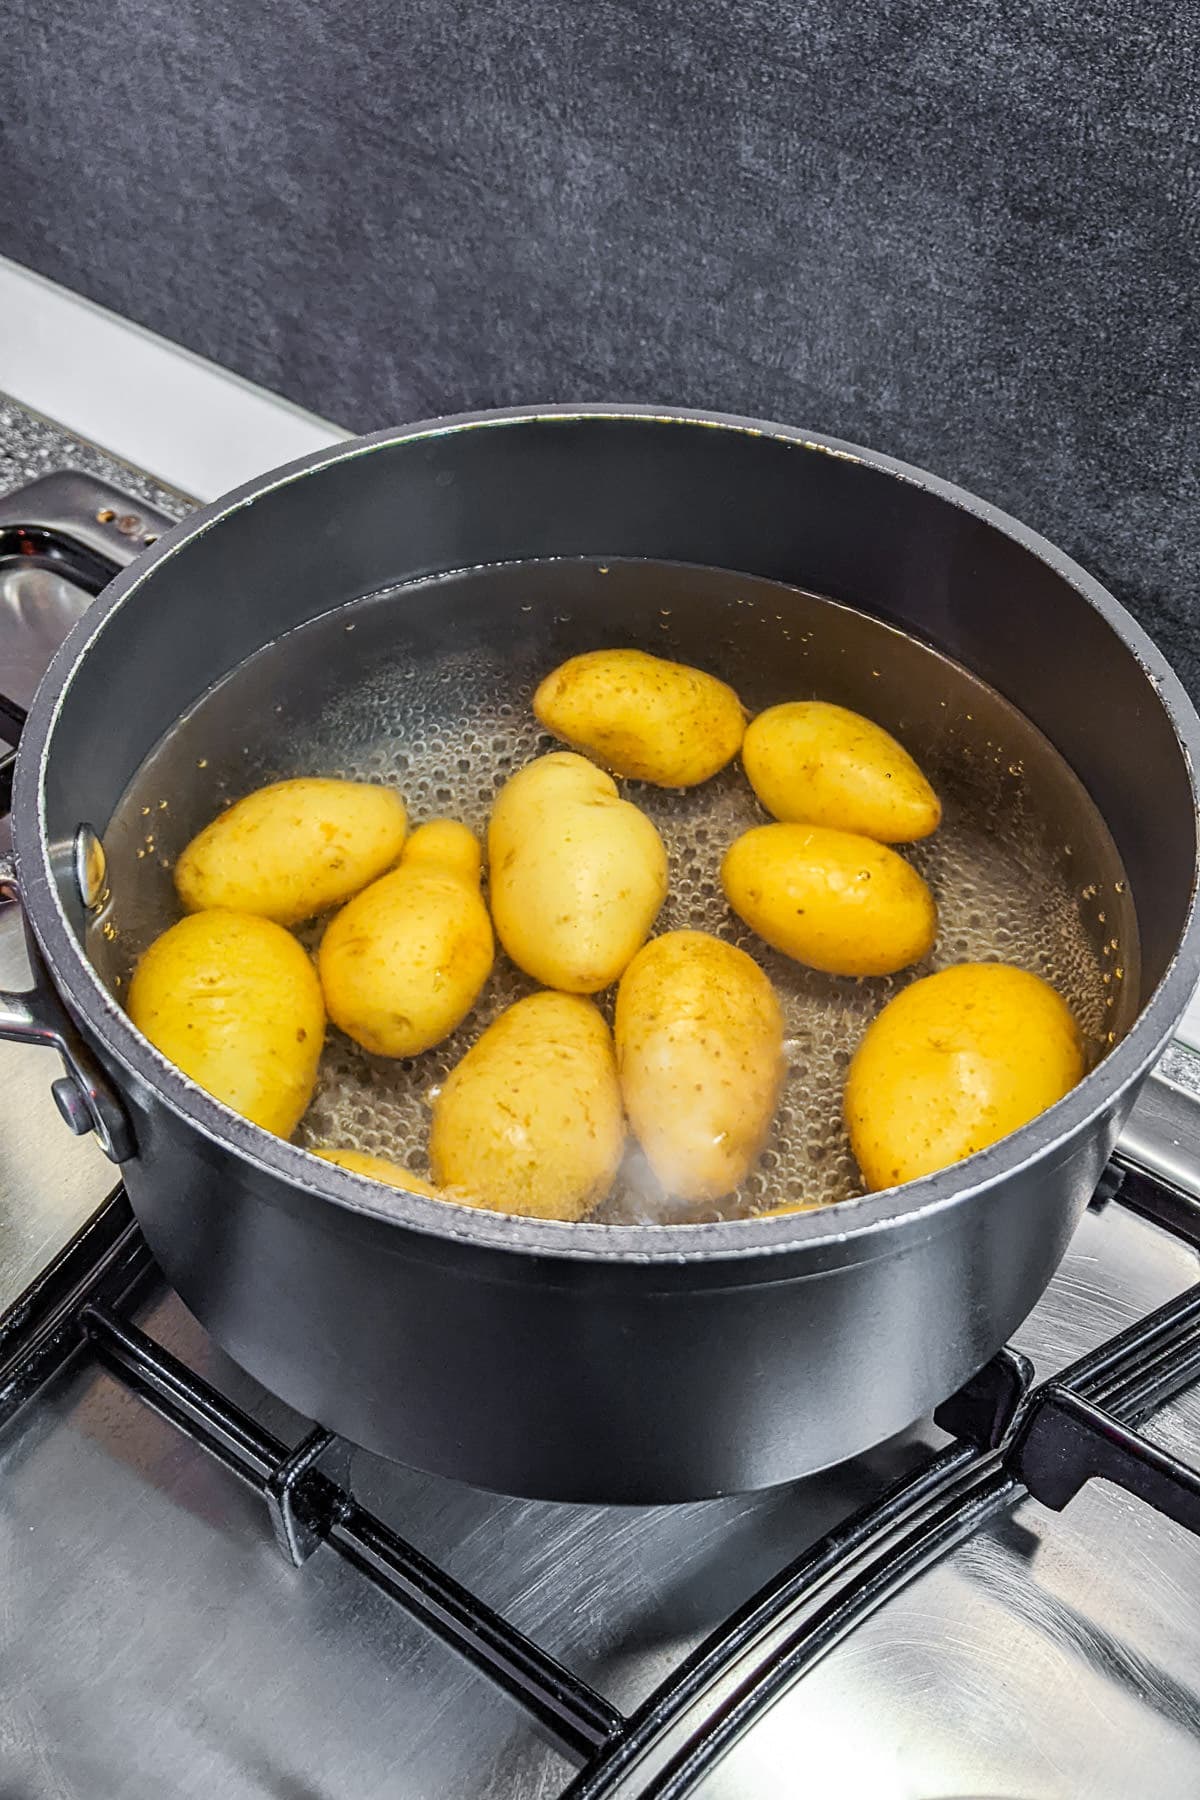 Boiling potatoes on a hob.